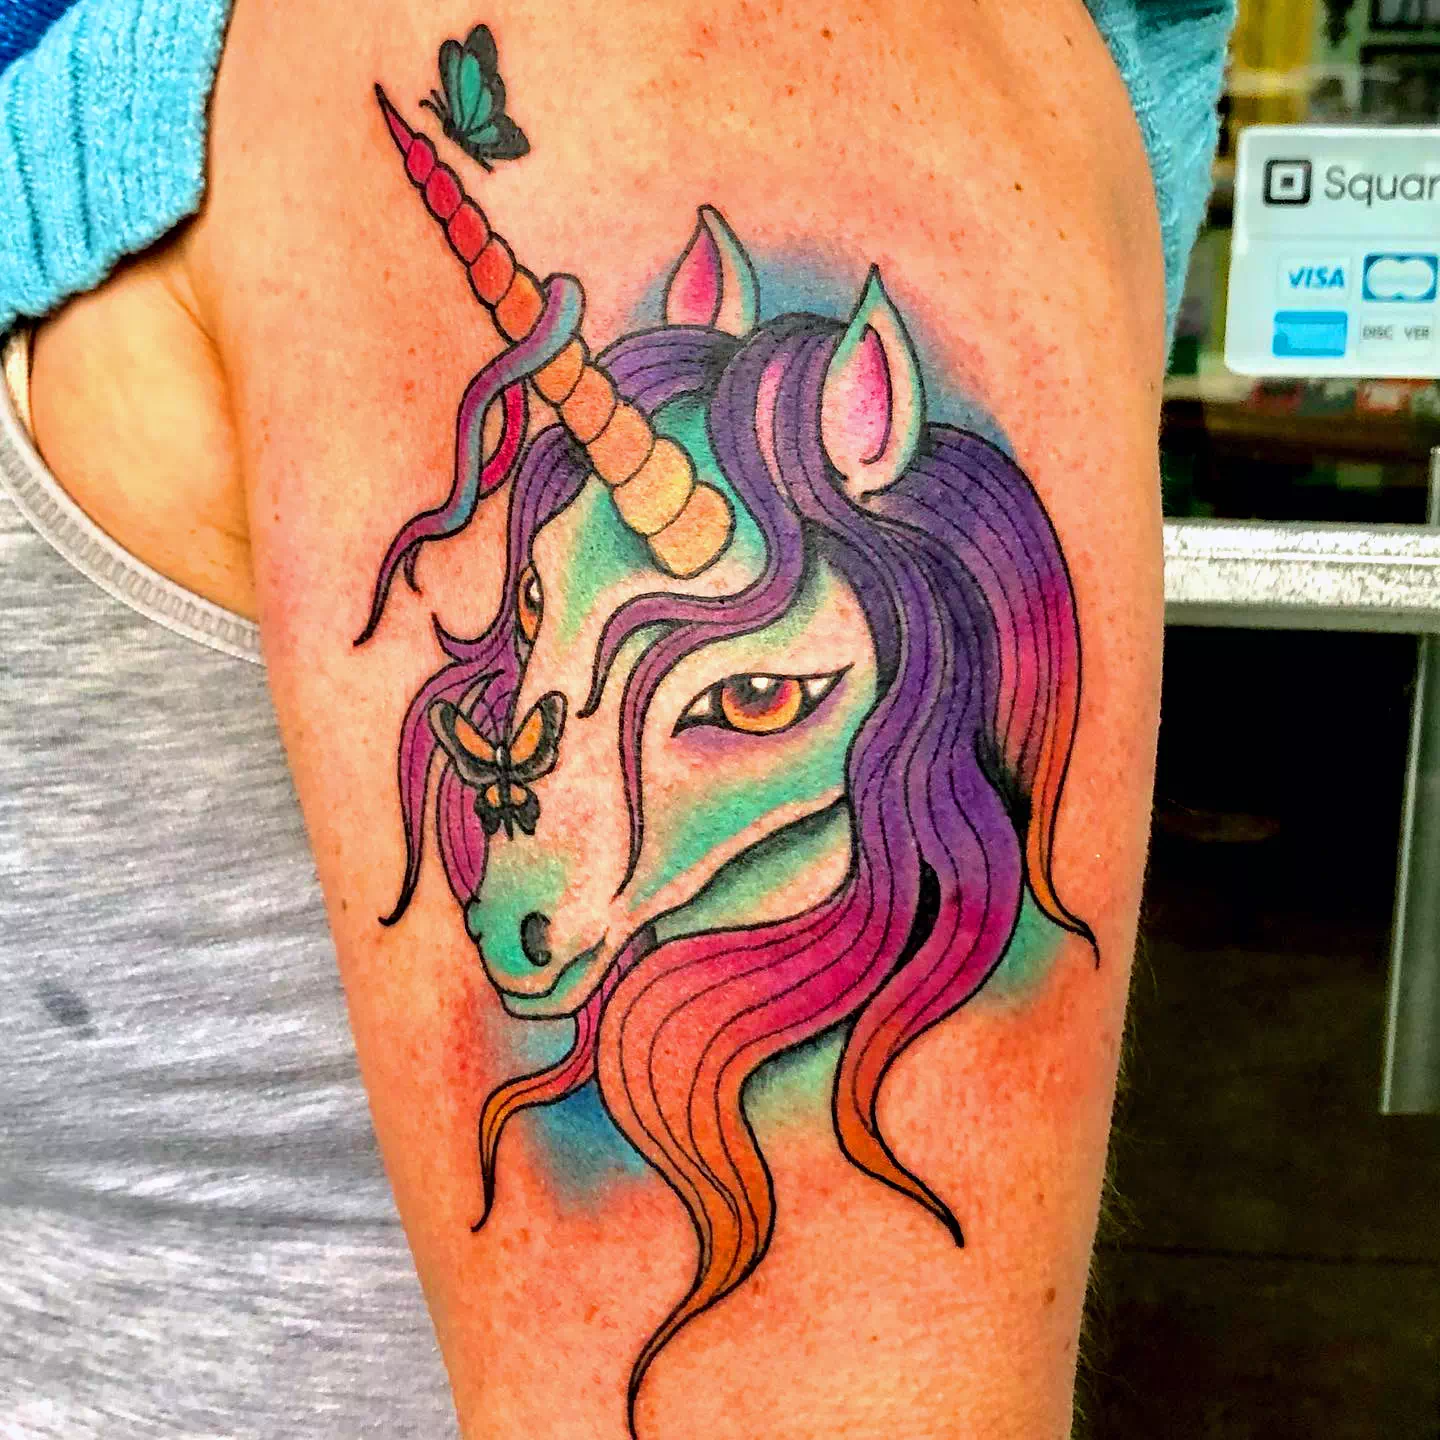 Tatuaje de unicornio arco iris de colores